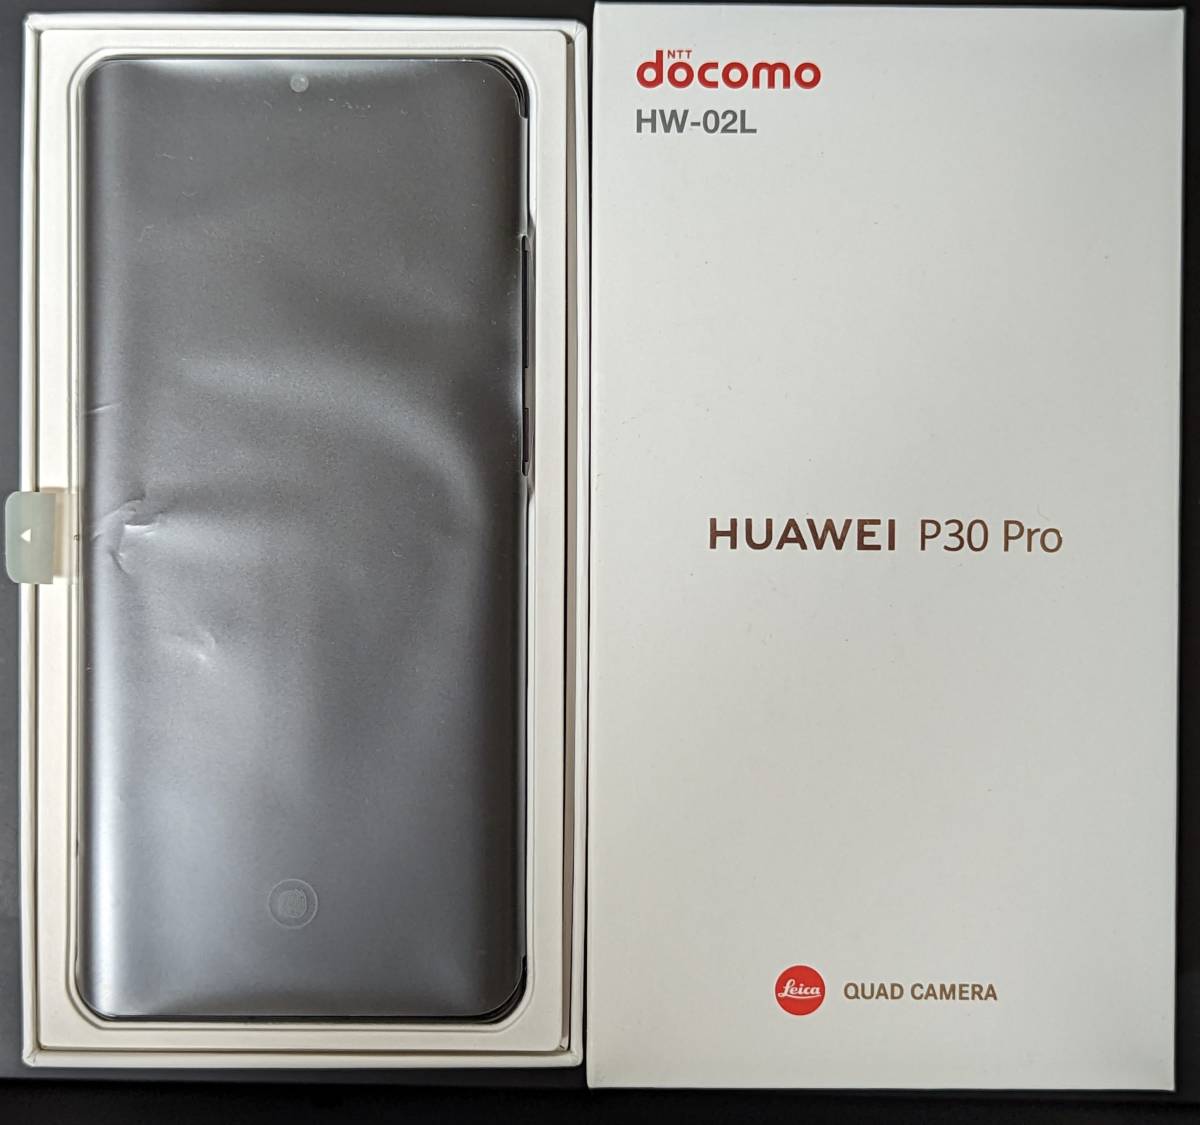 HUAWEI P30 Pro Docomo HW-02L 128GB Black SIMロック解除済み(Android 